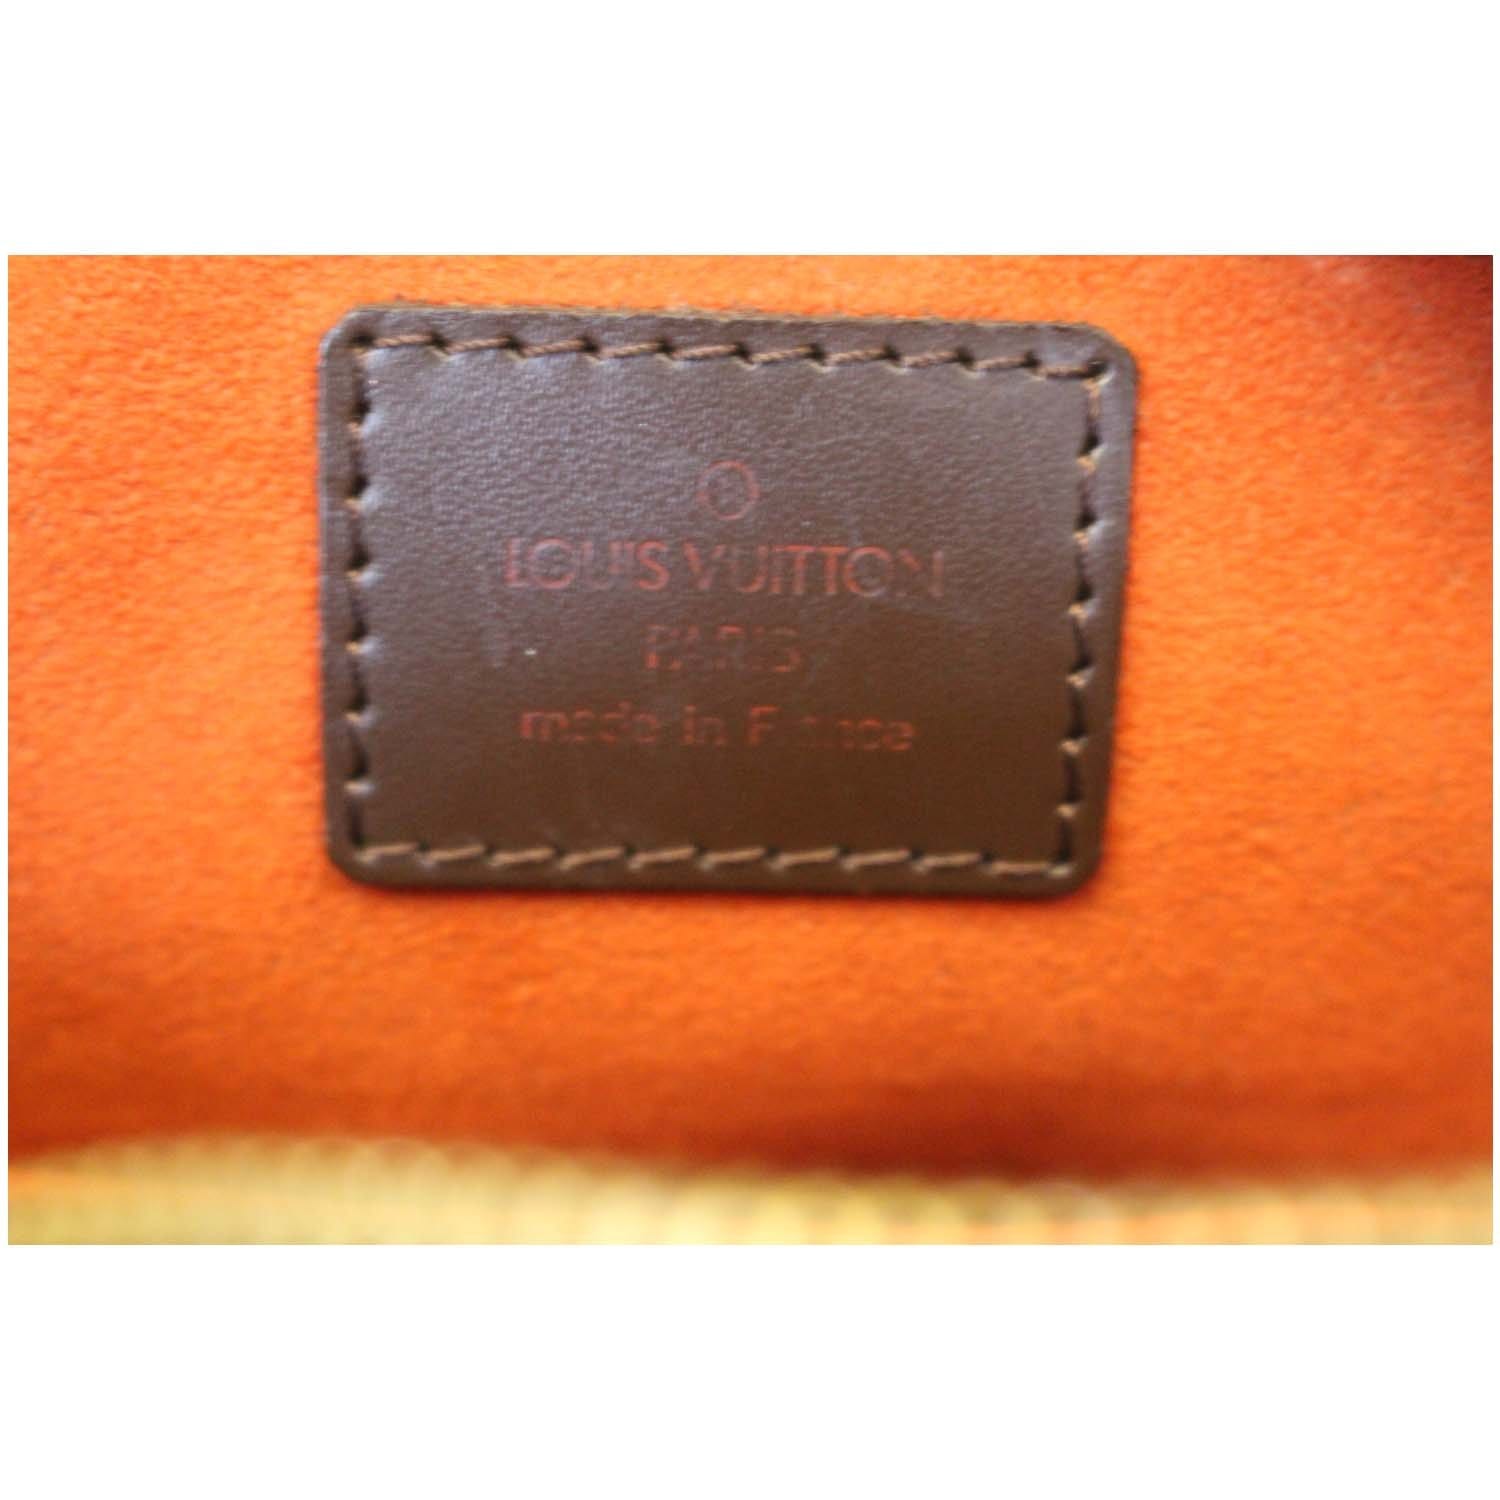 Louis Vuitton pre-owned Damier Ebène Ipanema GM Shoulder Bag - Farfetch